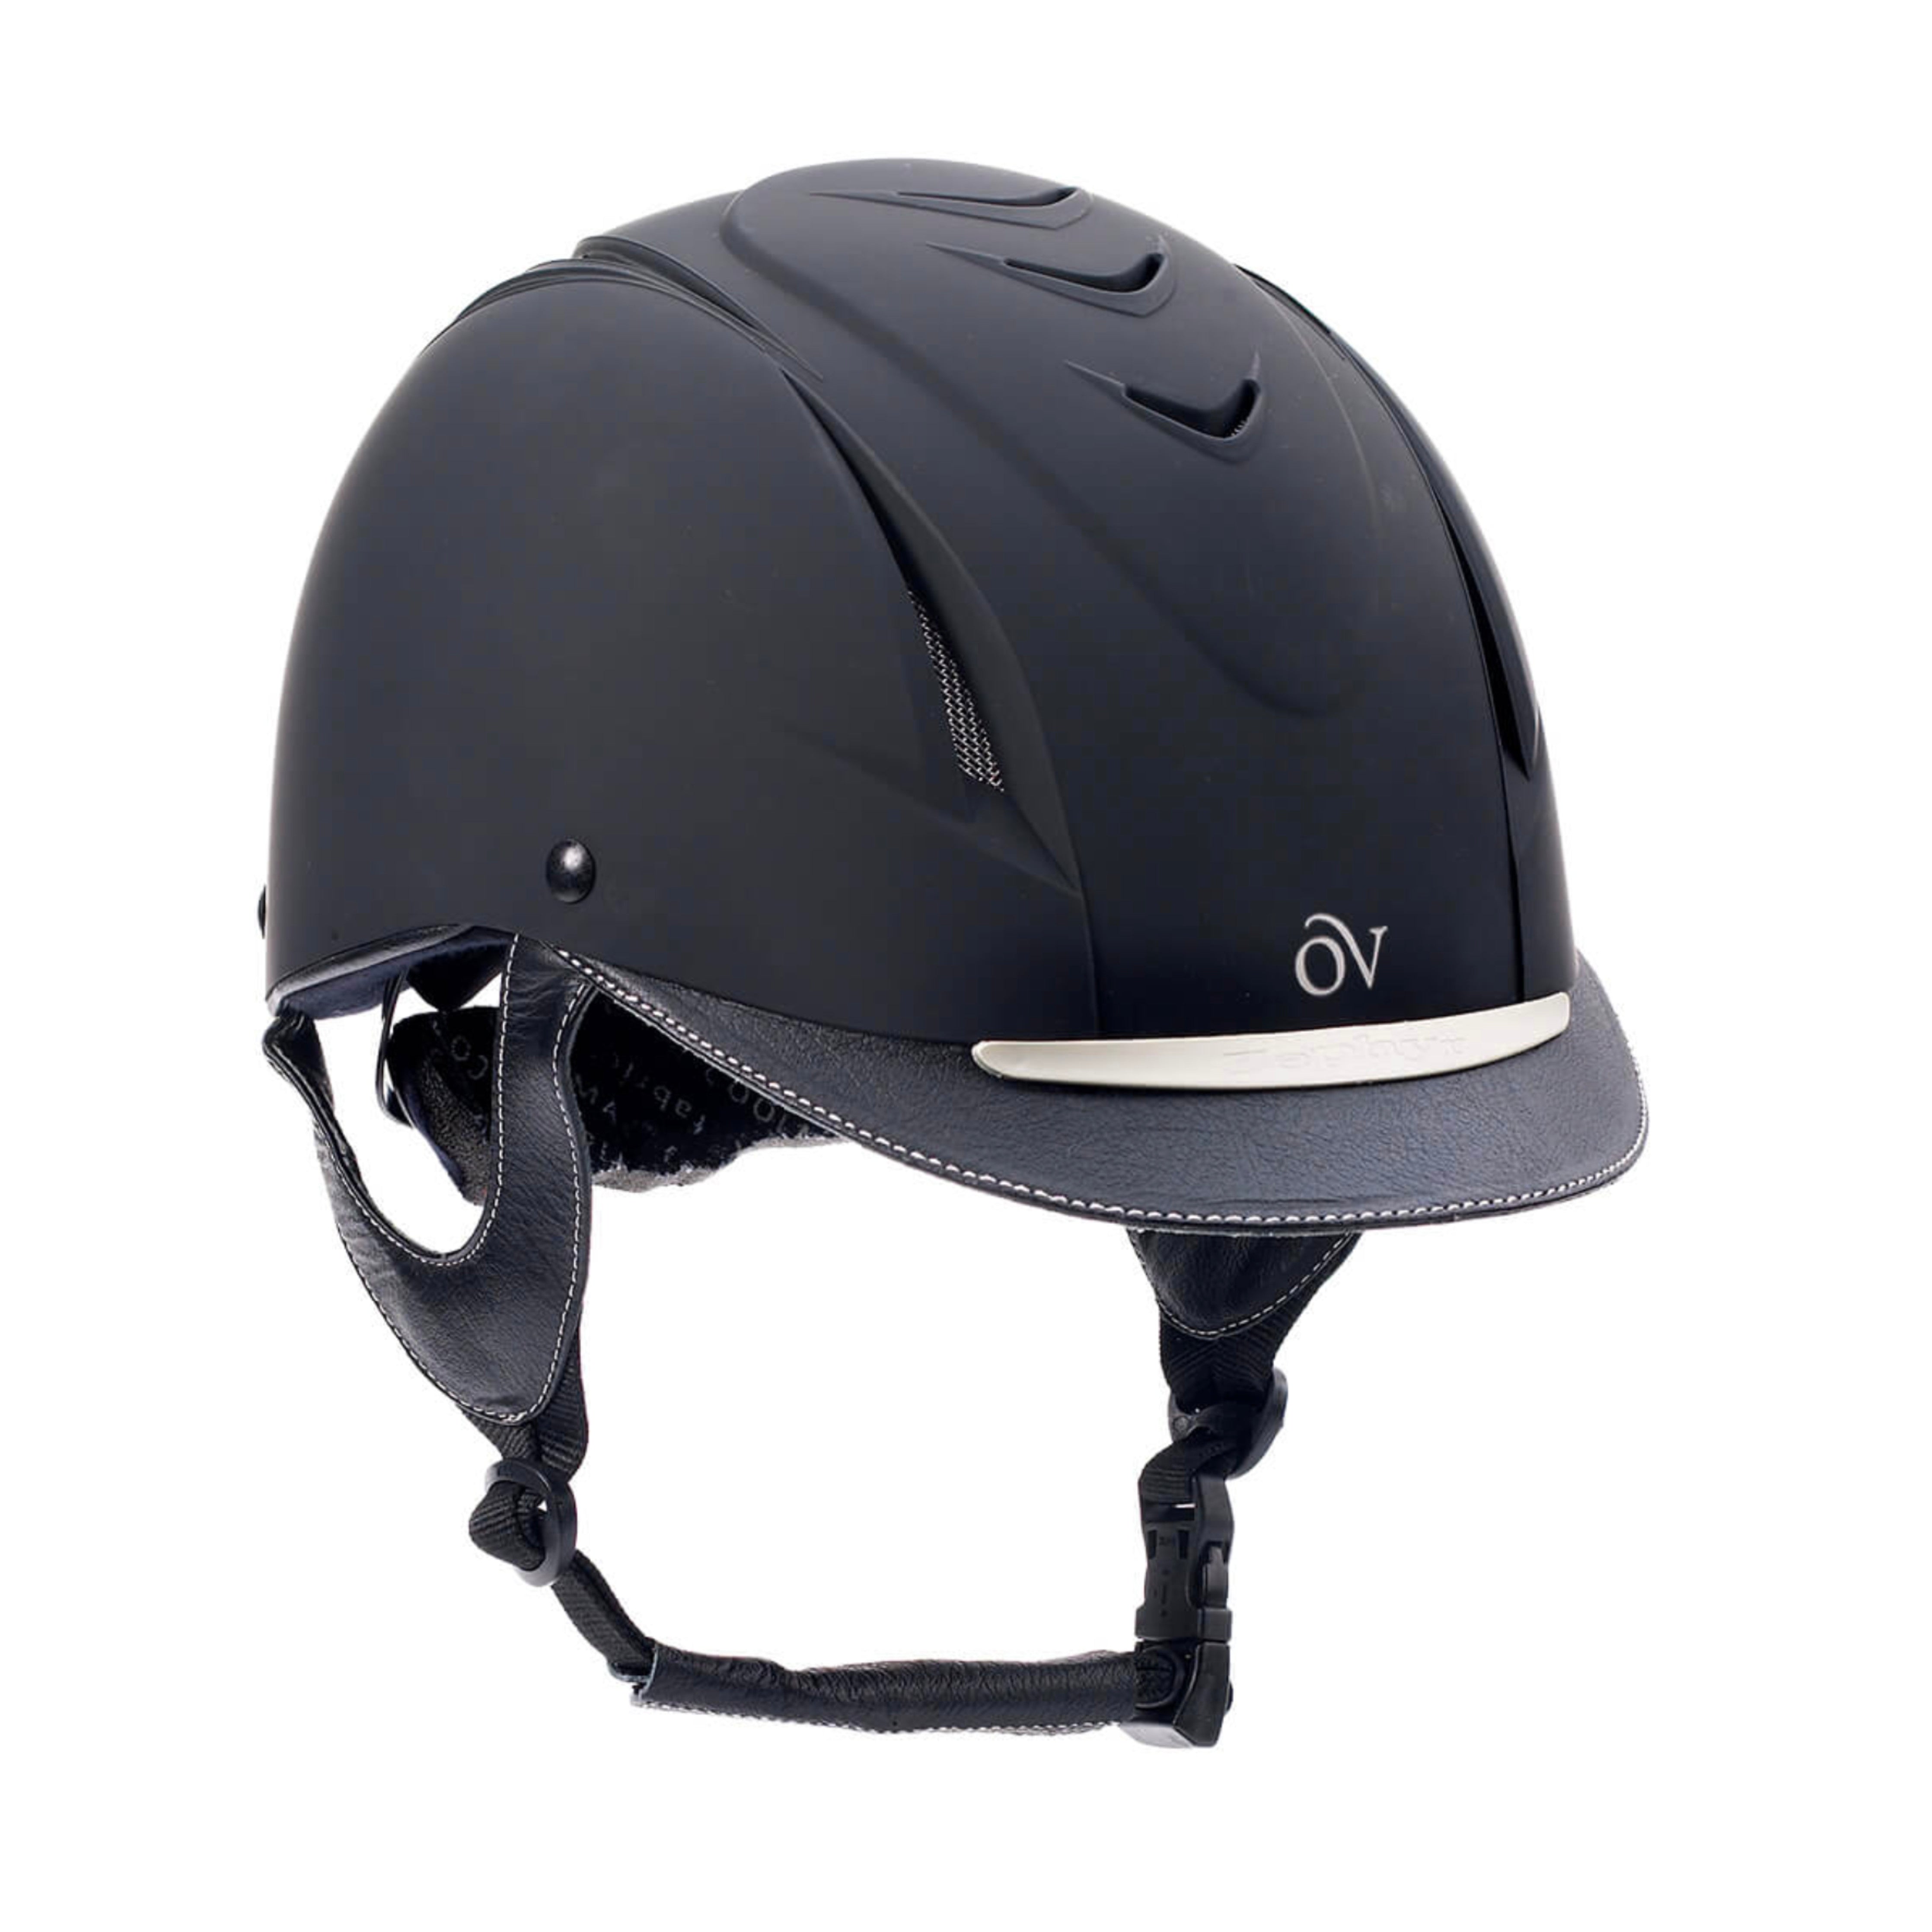 Ovation Helmet Zephyr Elite Z-6